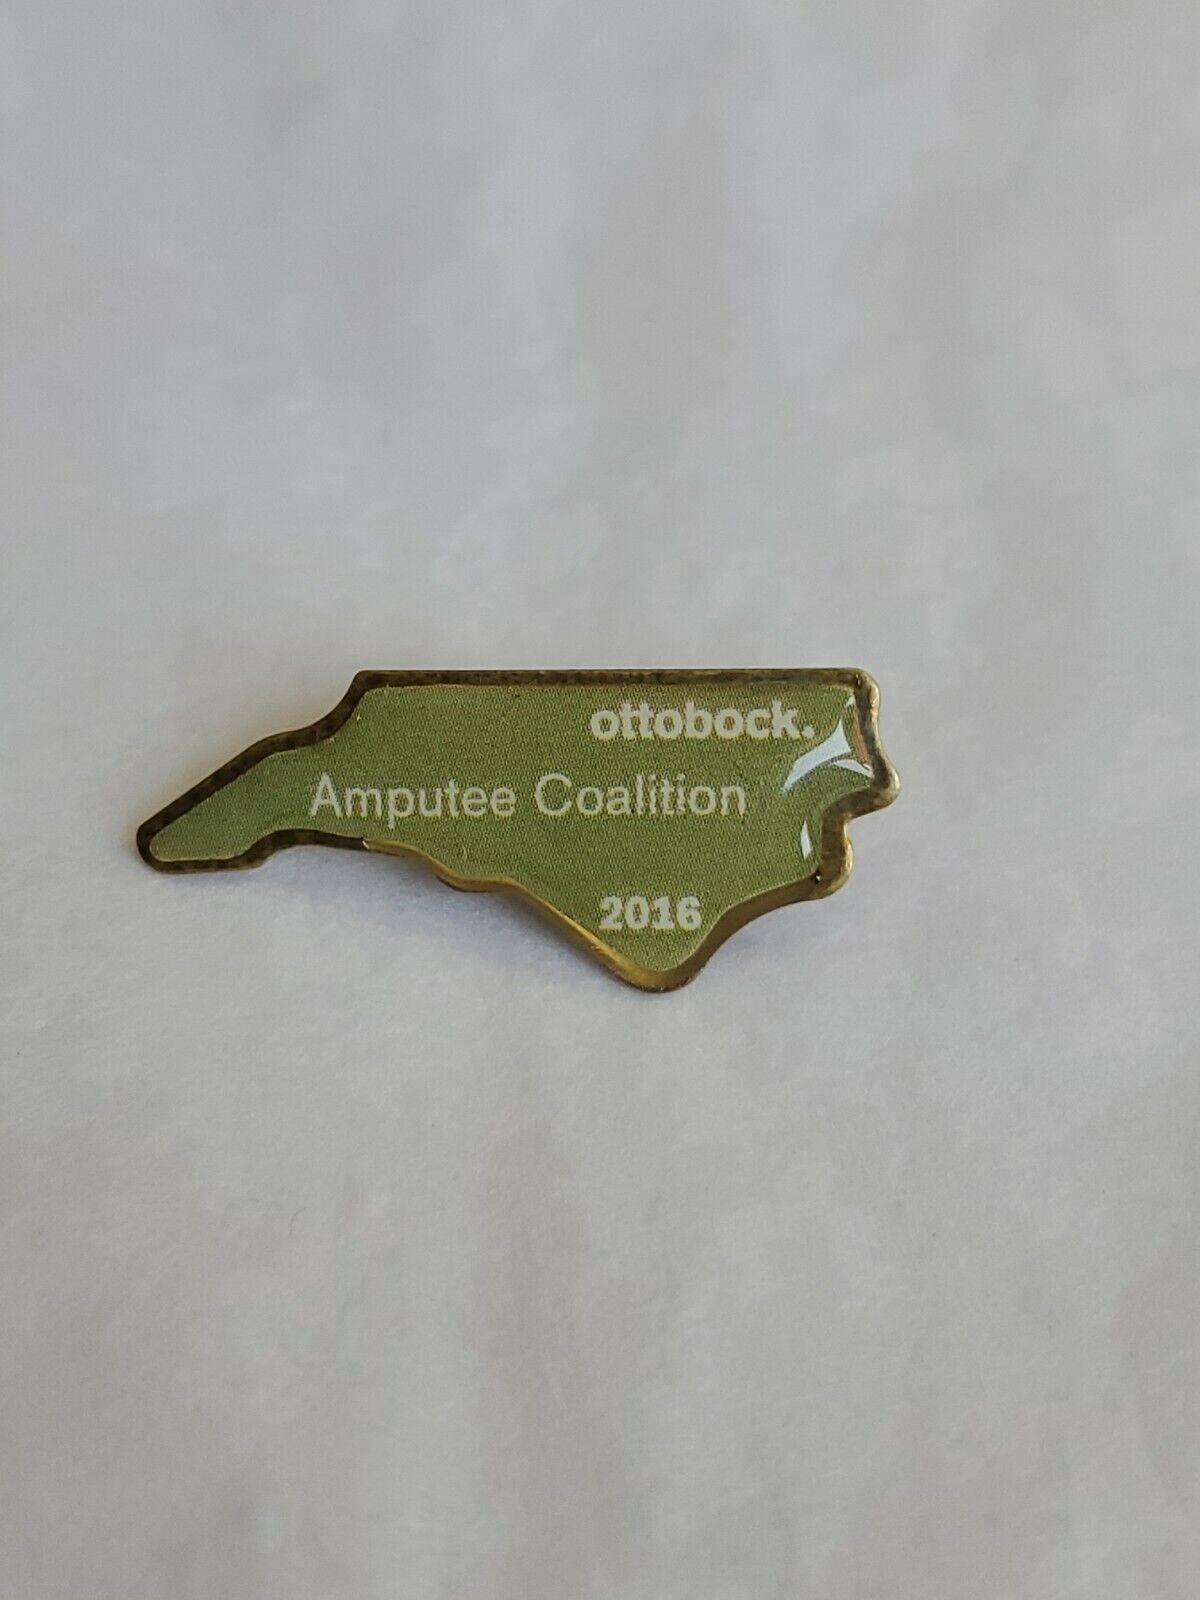 Ottobock Amputee Coalition 2016 Lapel Pin North Carolina